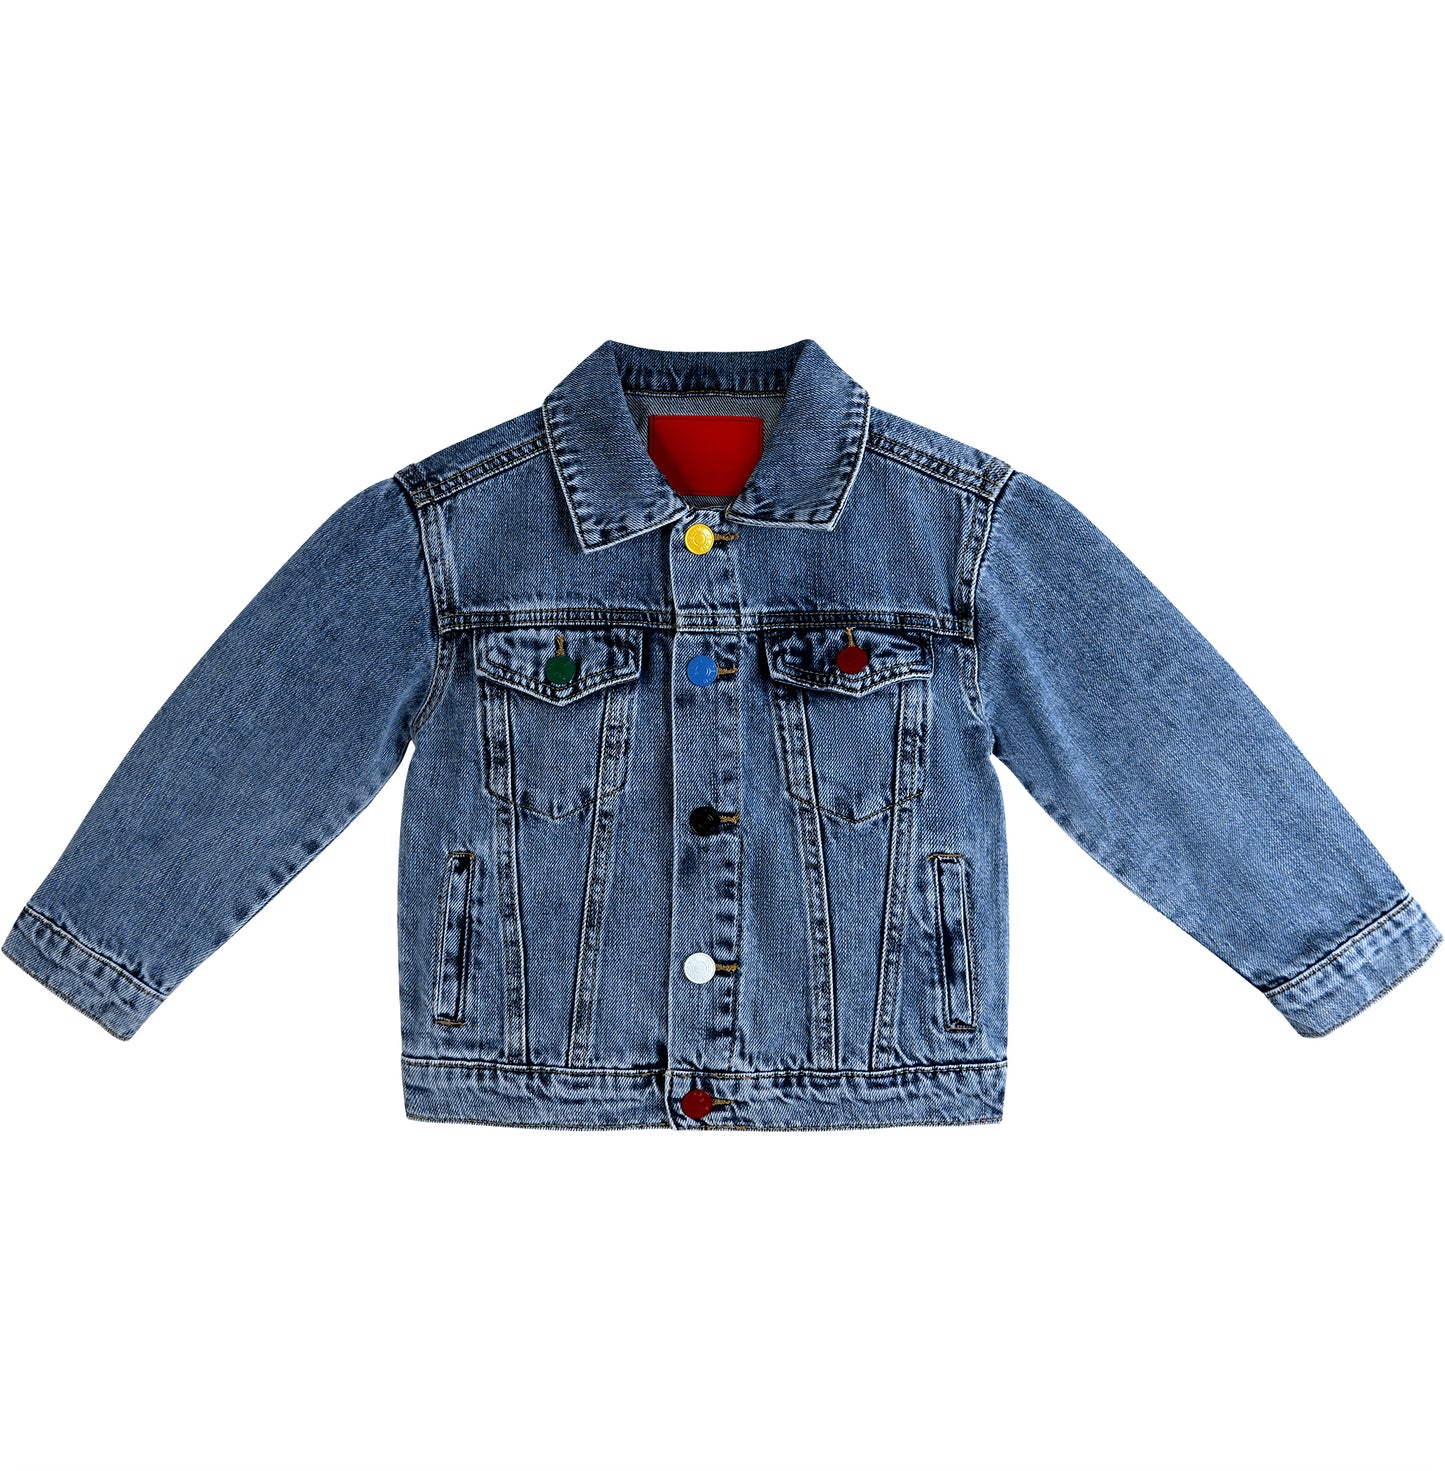 Boys Denim Jacket,Little Big Kids Simple Design Colored Buttons Jean Coat